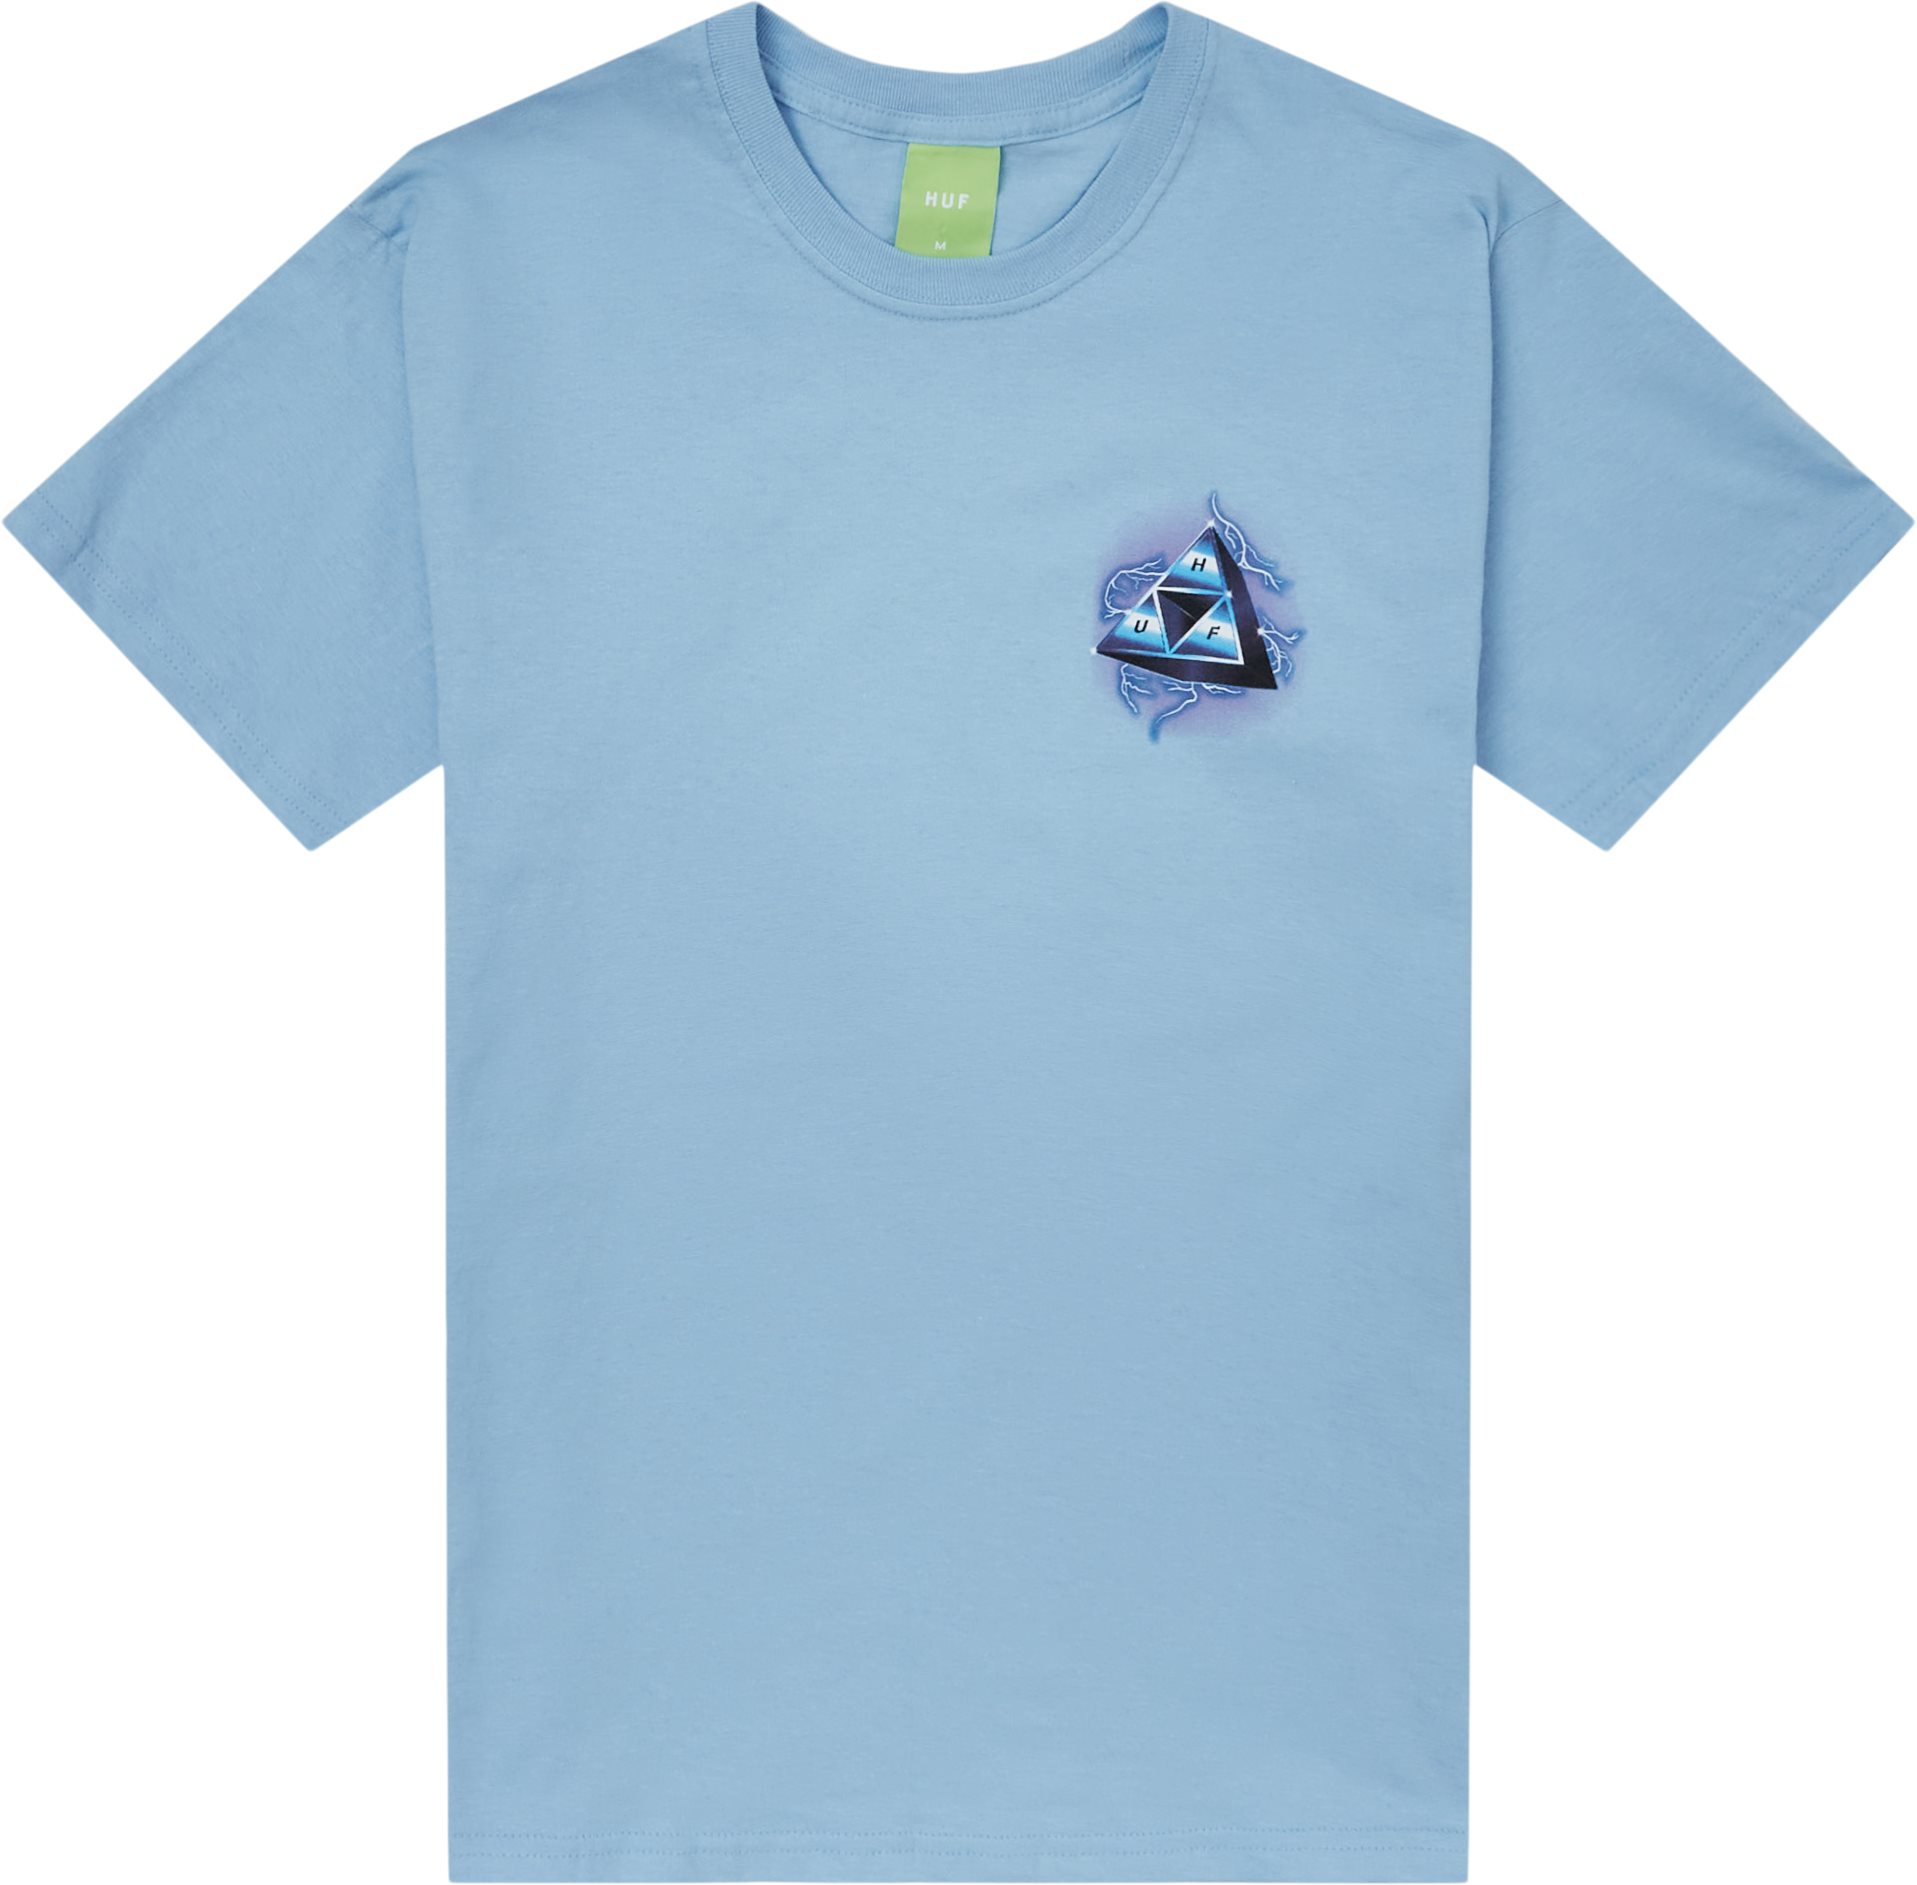 Storm Tee - T-shirts - Regular fit - Blue